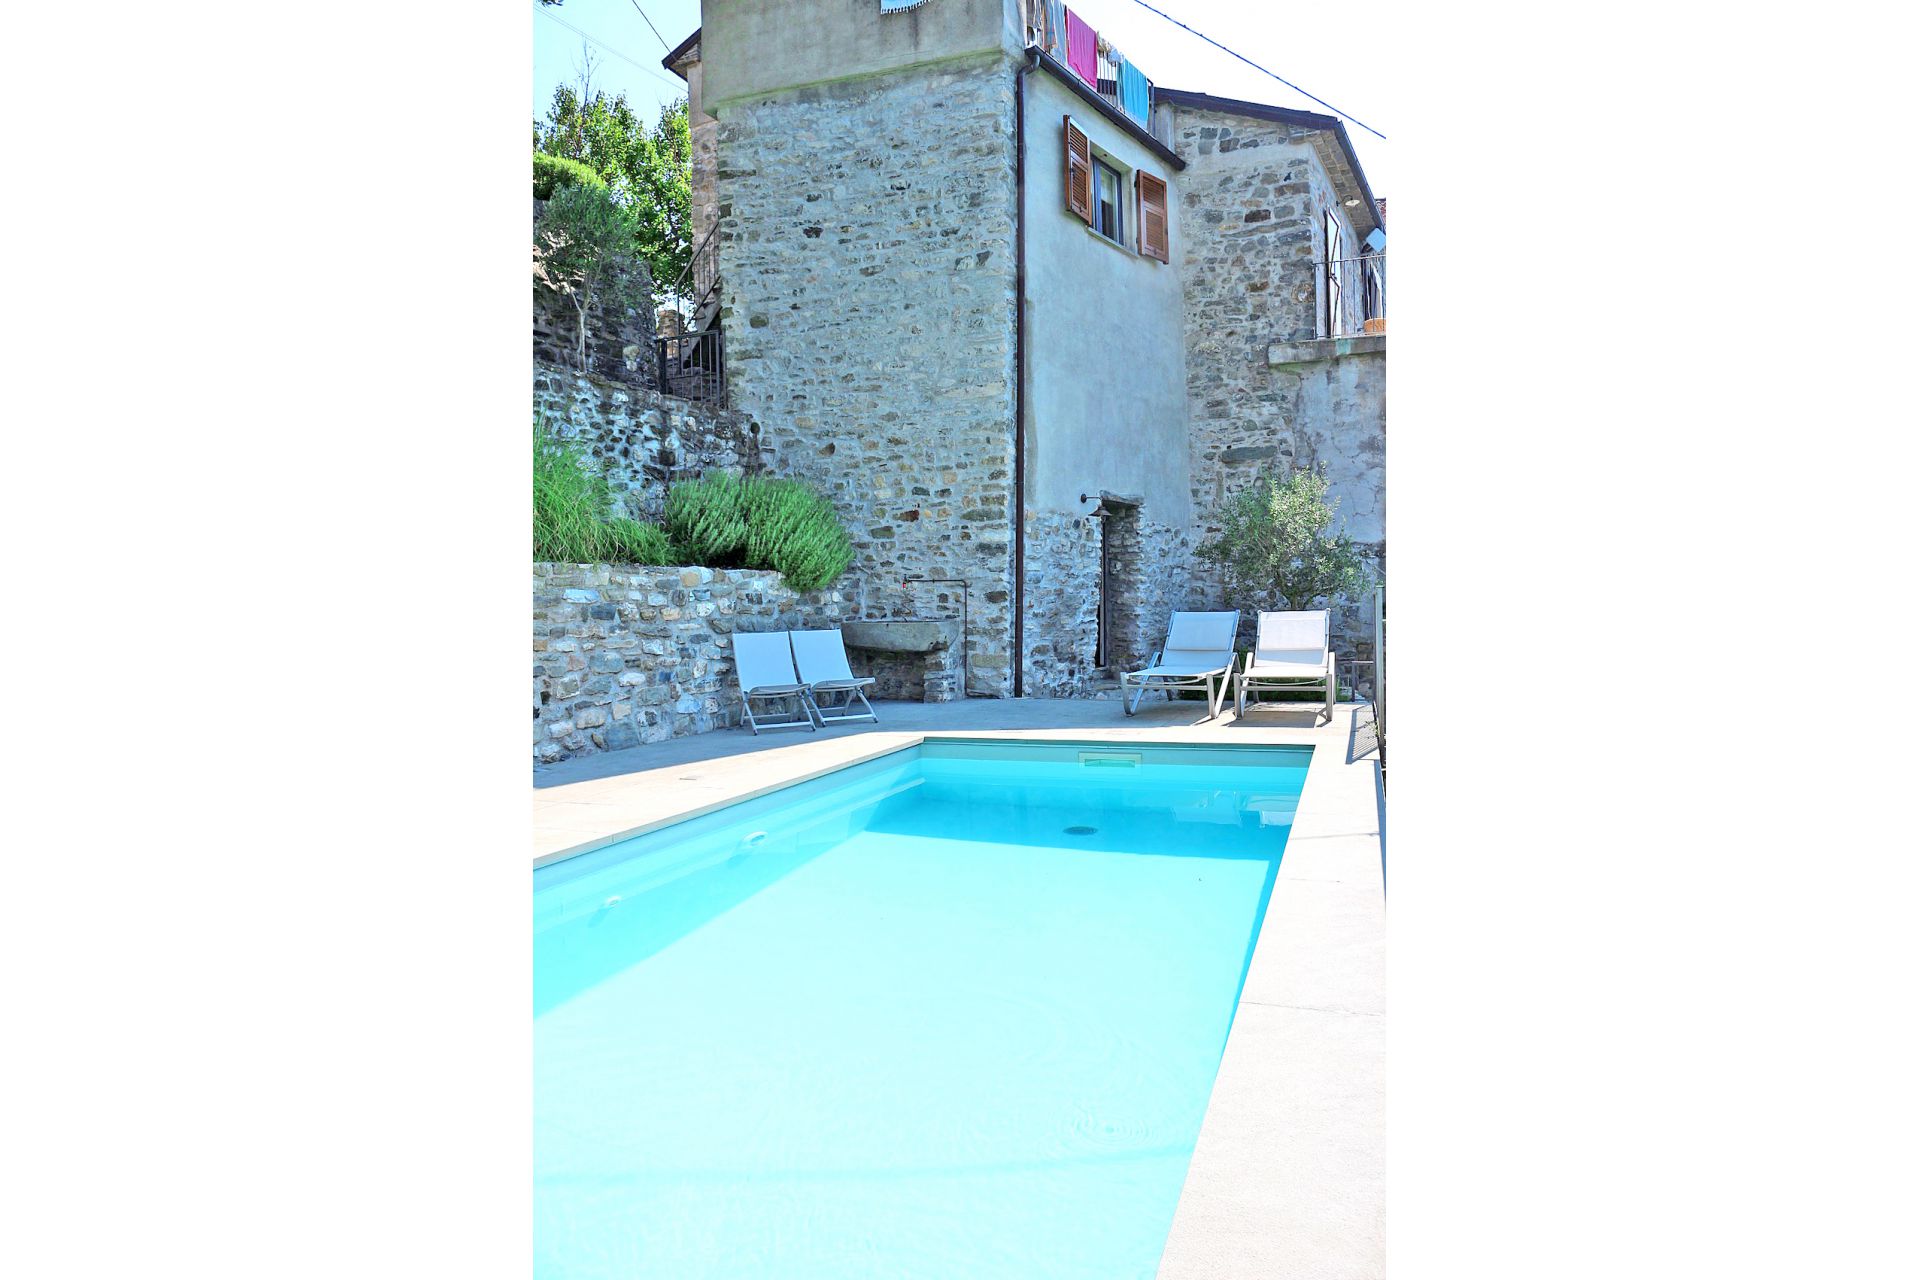 Méditerranée Location House with Private pool in Tresana, Toscane